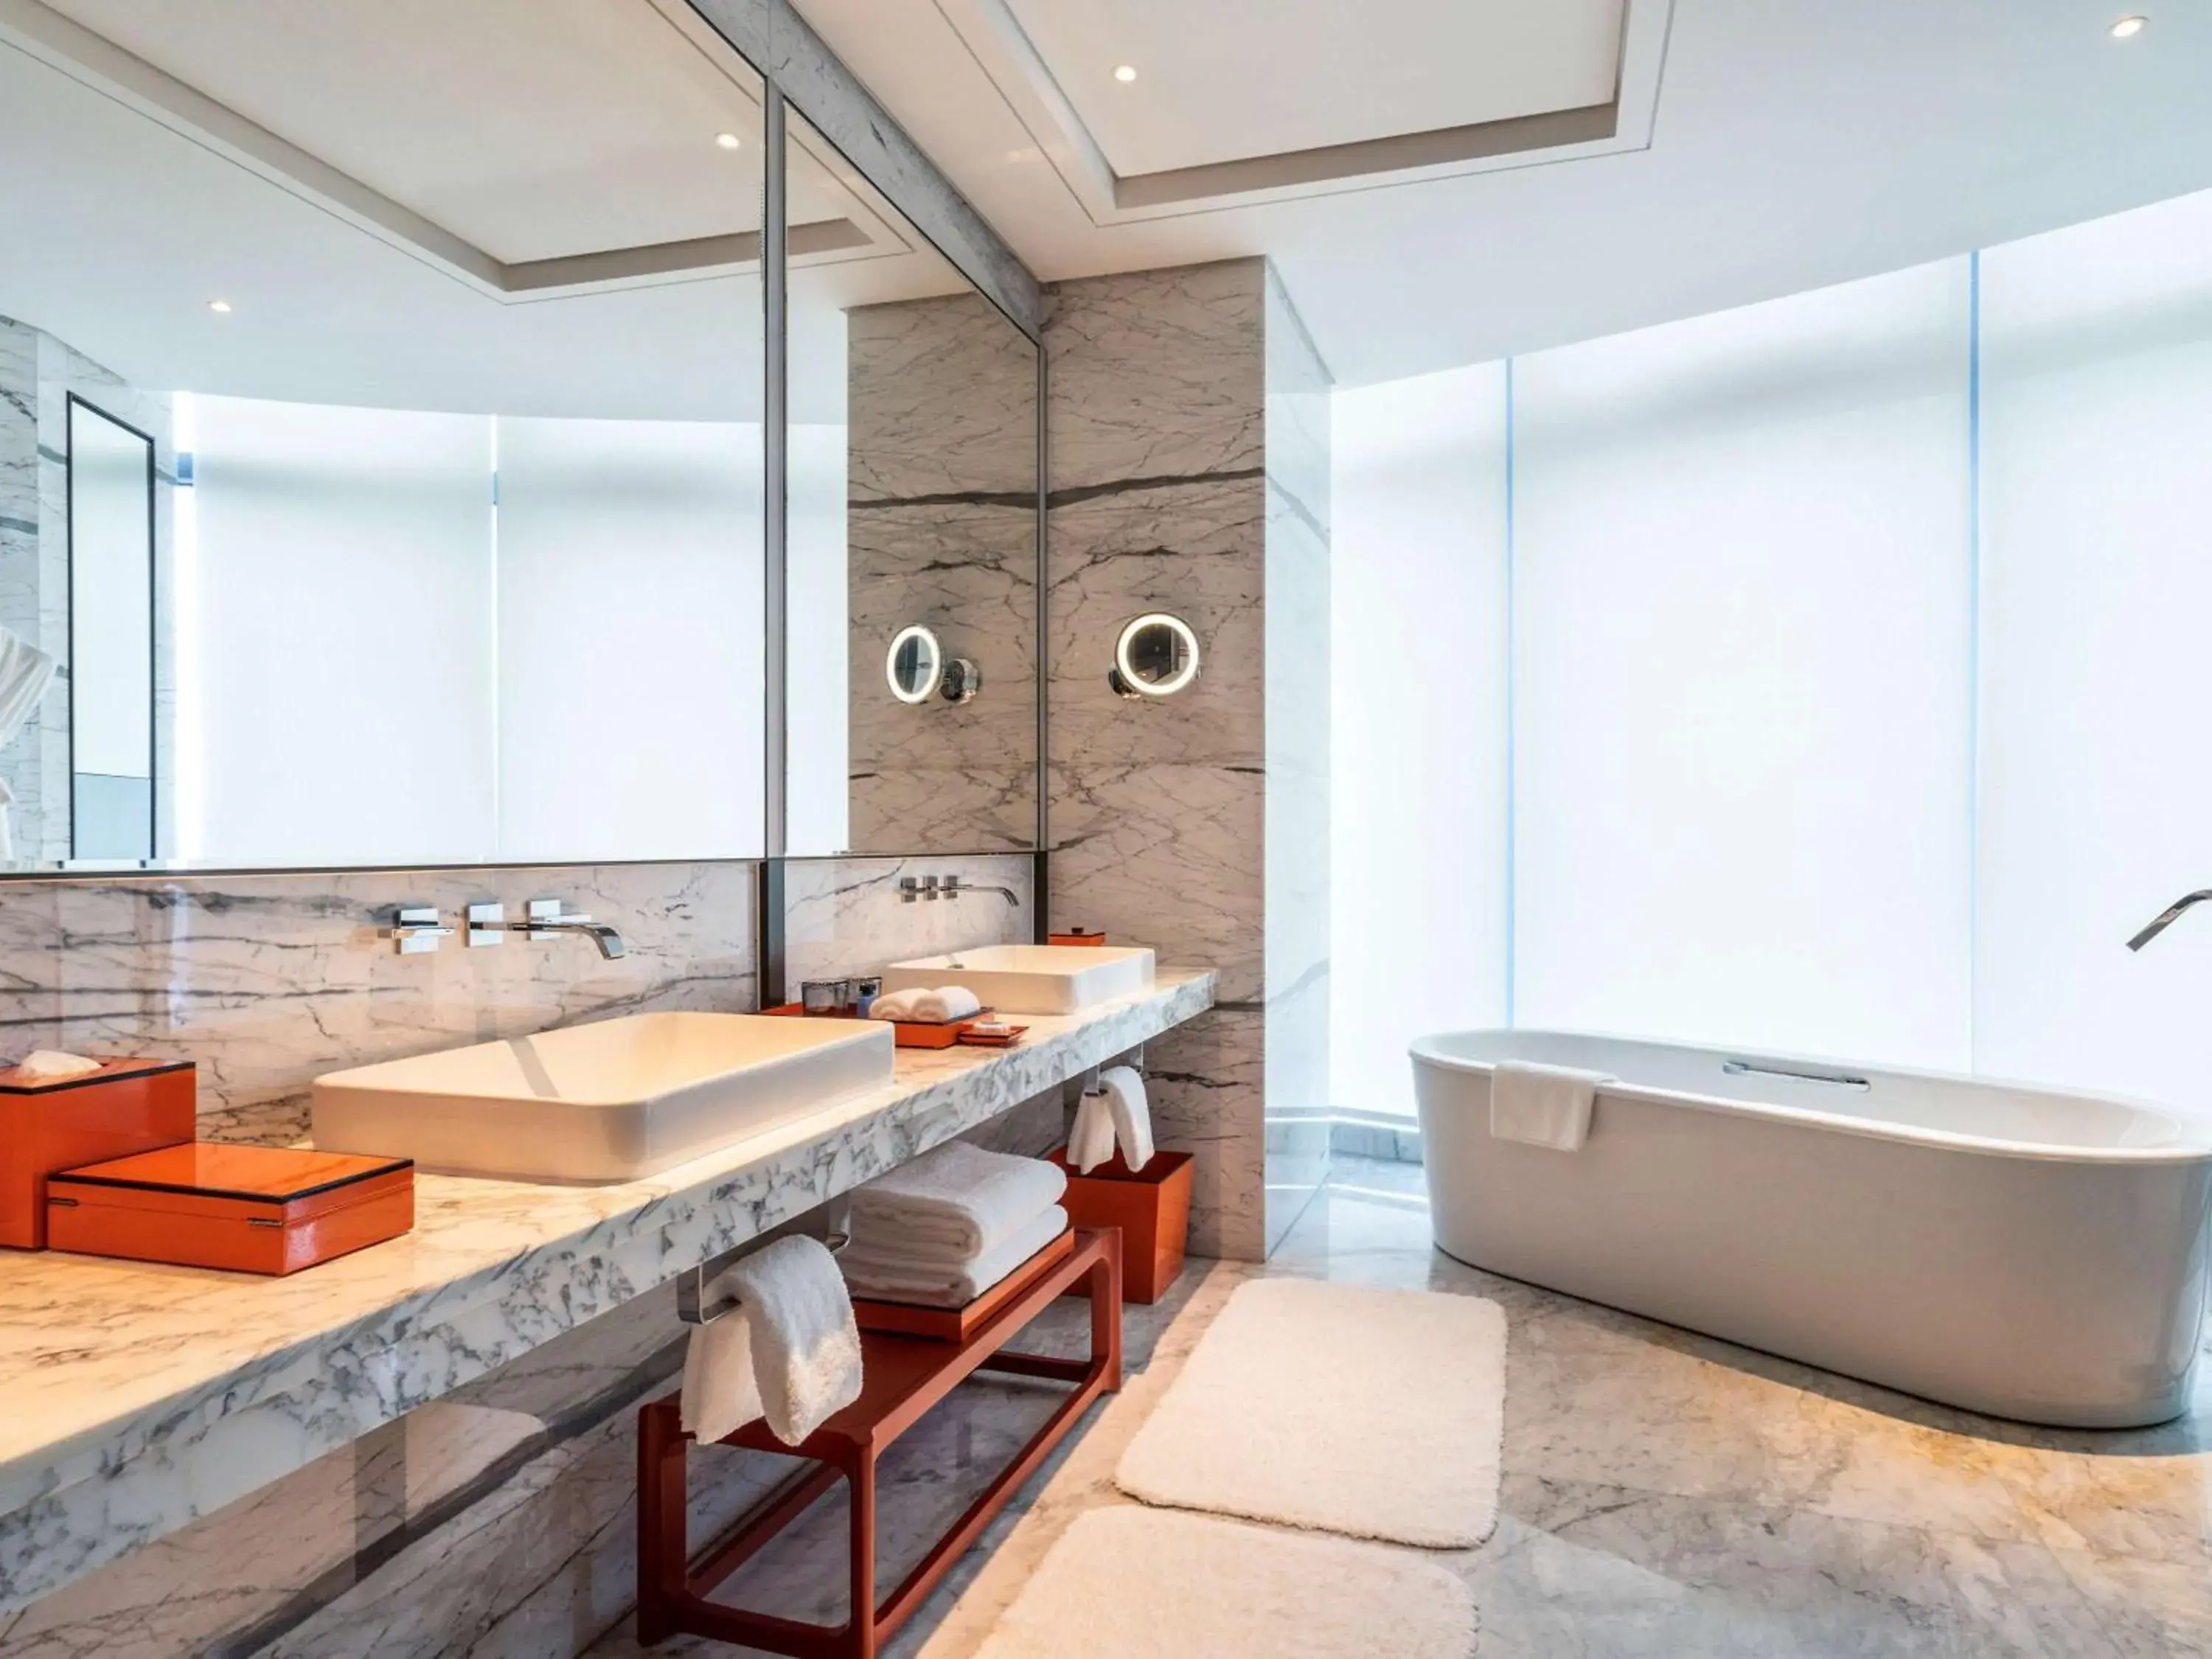 Photo of the whole room, Bathroom in Sofitel Hangzhou Yingguan